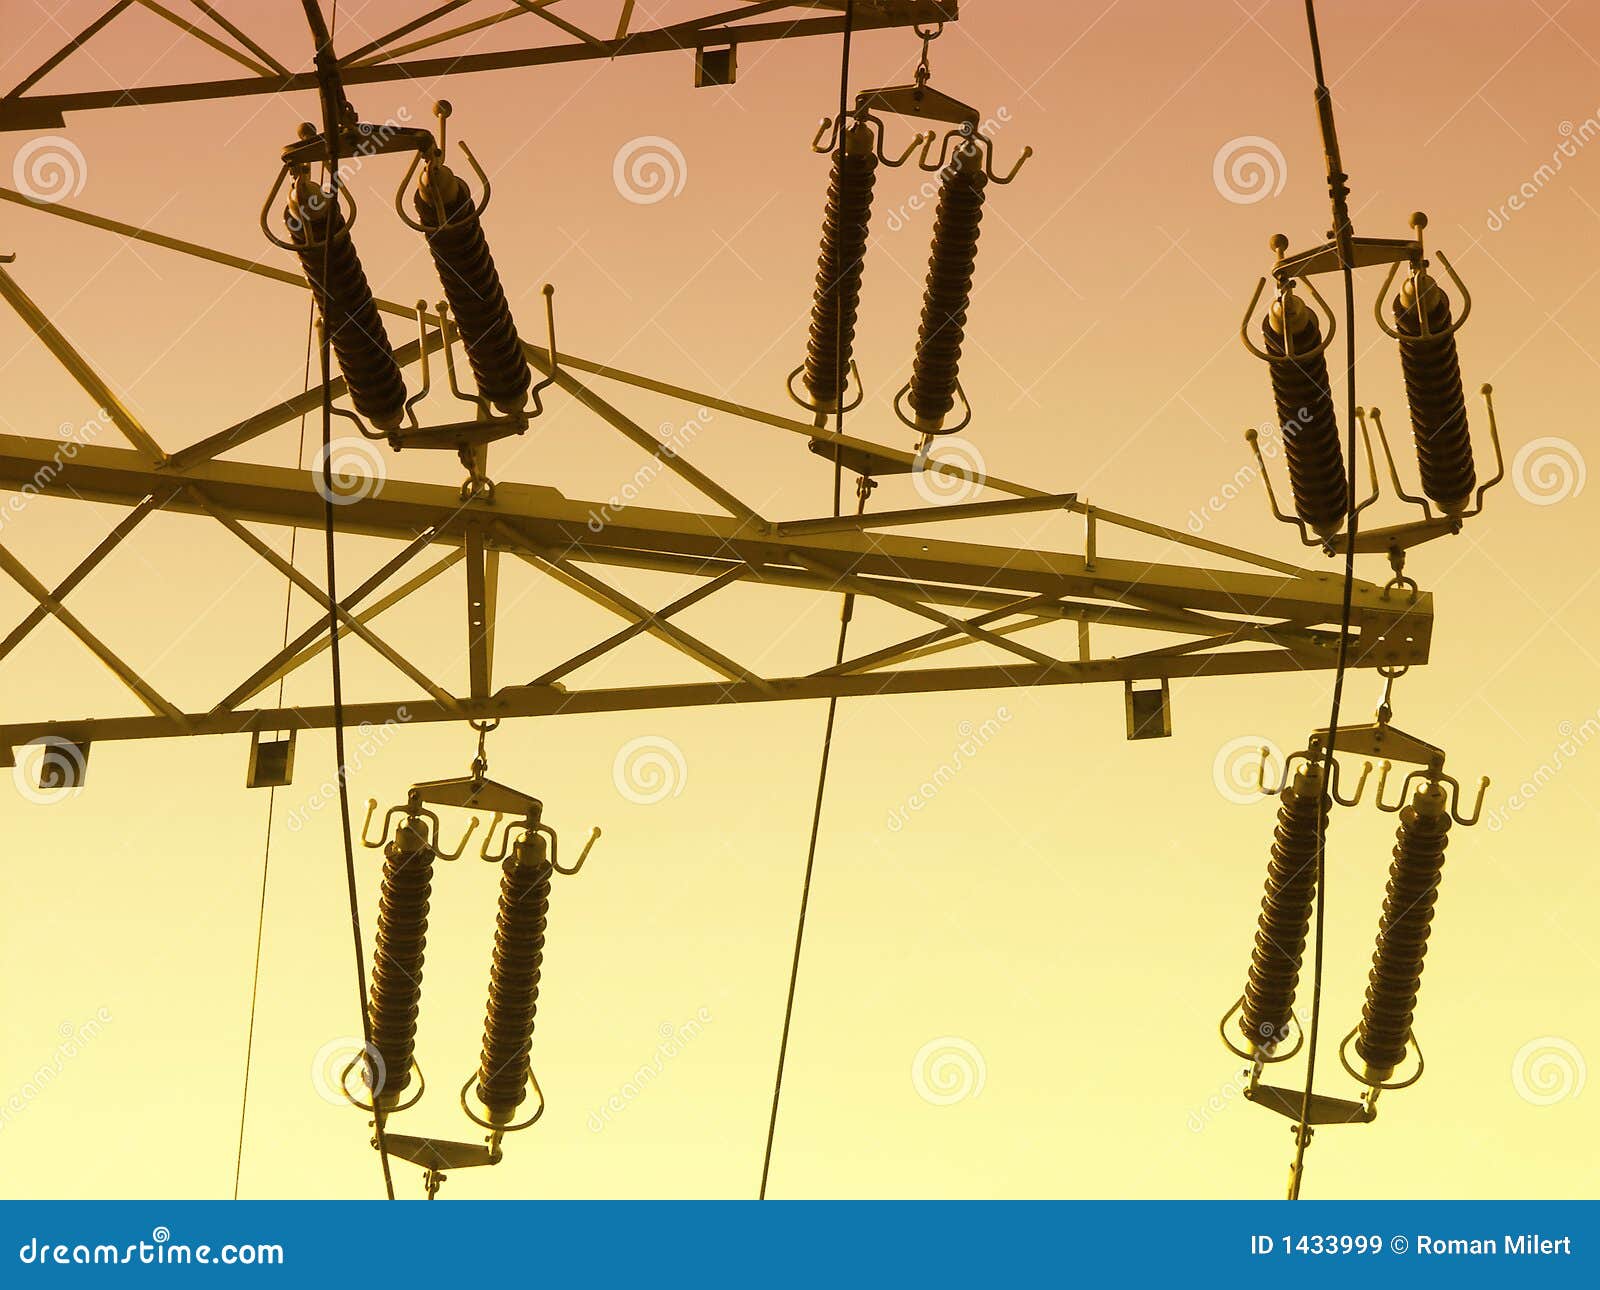 High voltage line. High voltage pylon with insulators over sunset sky